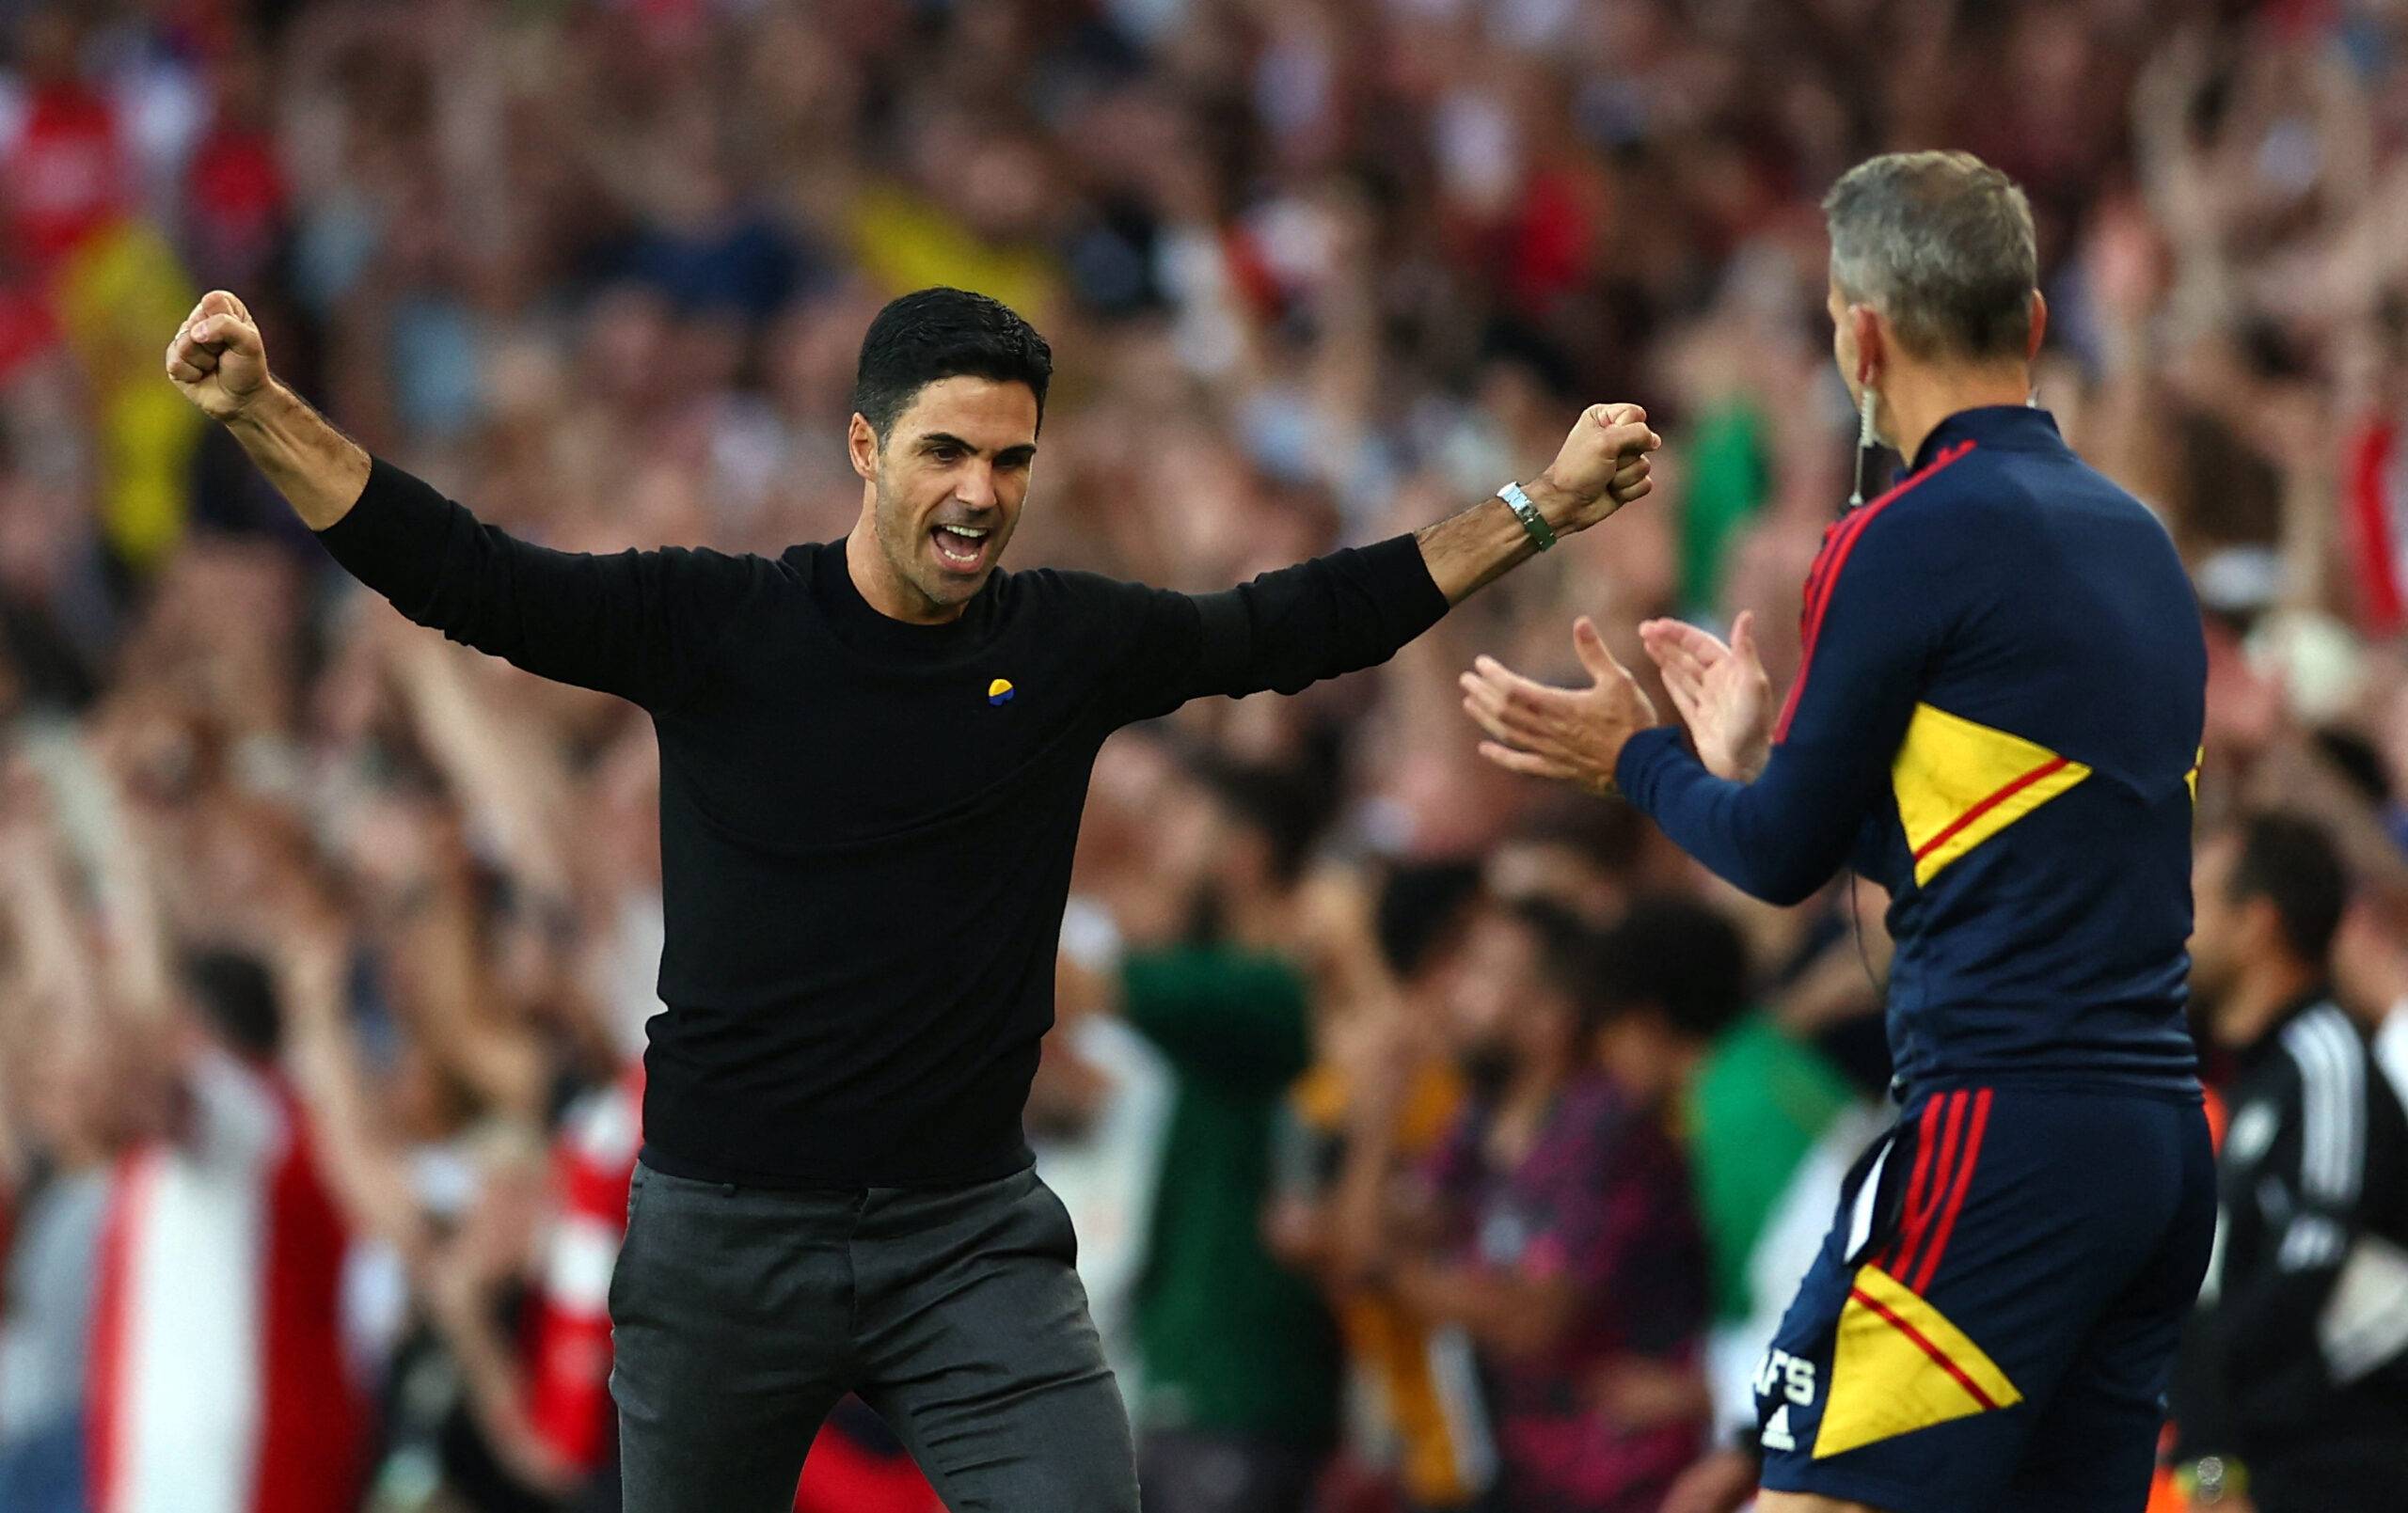 Arsenal boss Mikel Arteta celebrates after the match